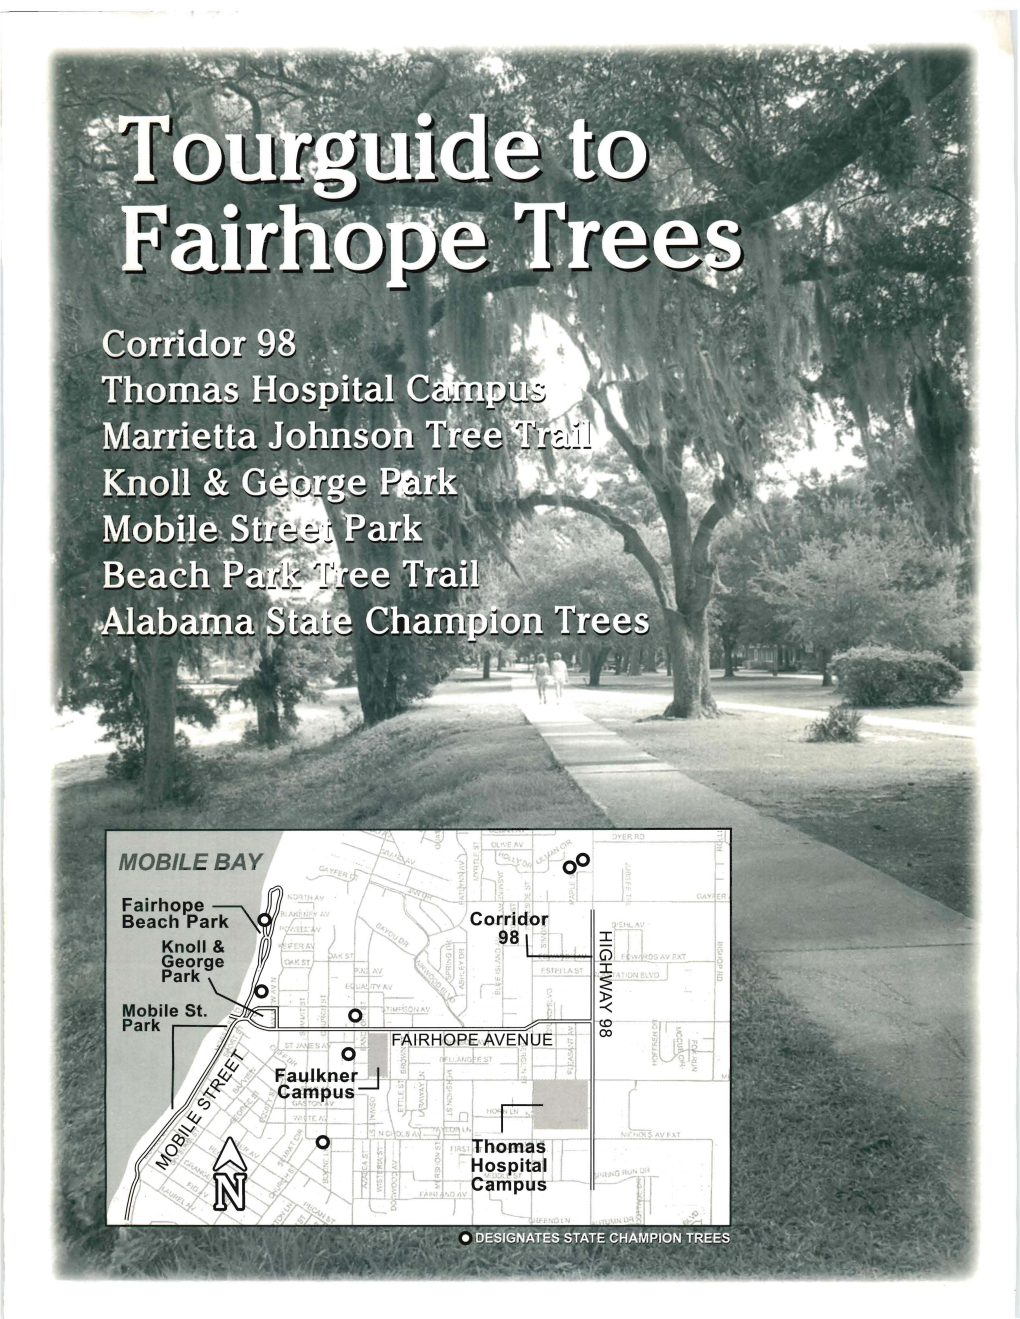 Tourguide to Fairhope Trees